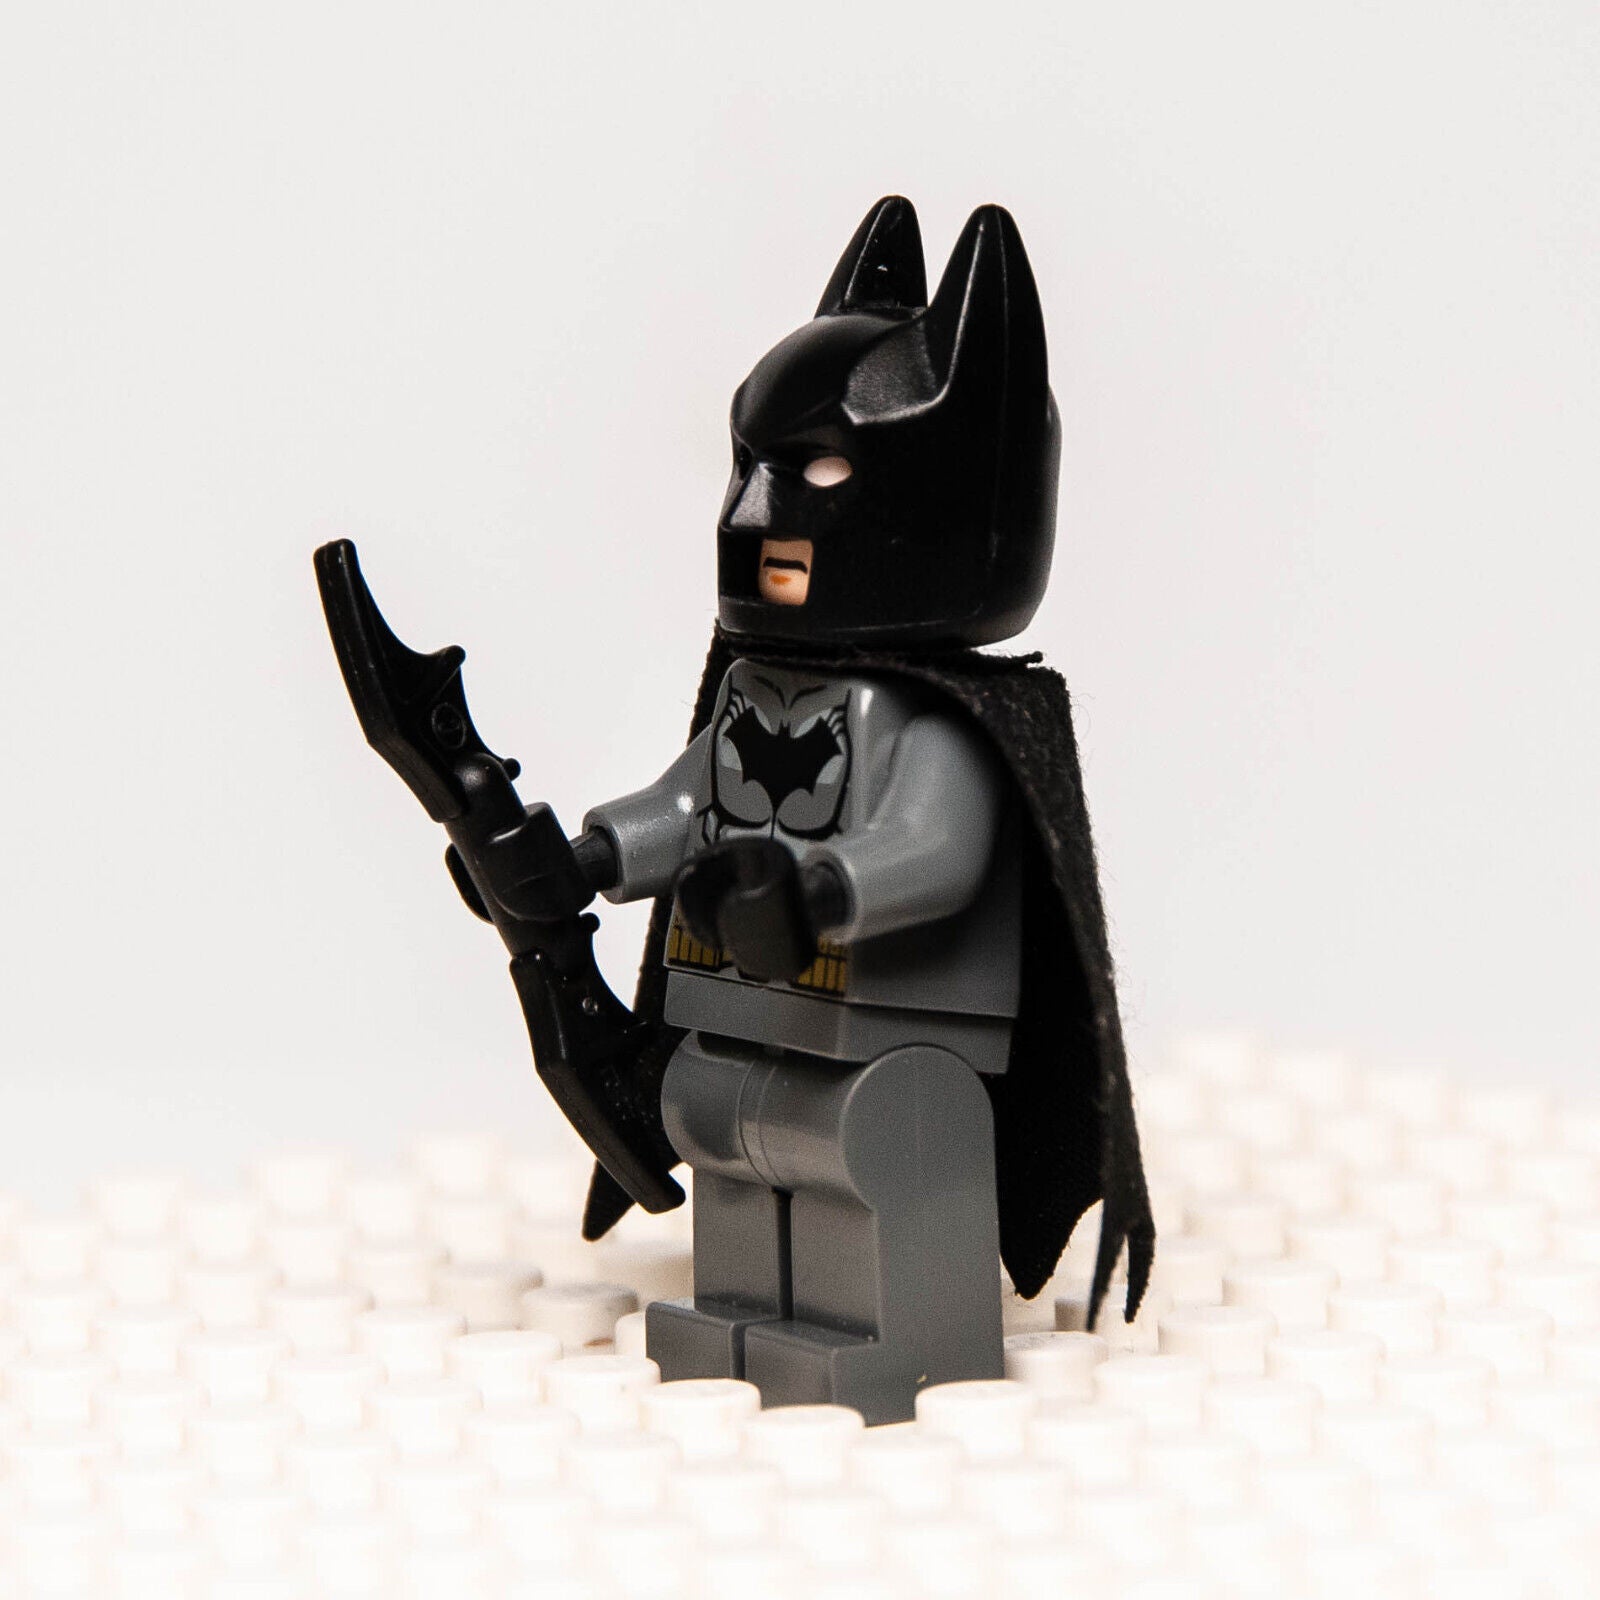 LEGO Minifigure - Batman Dimensions (dim002) DC Super Heroes